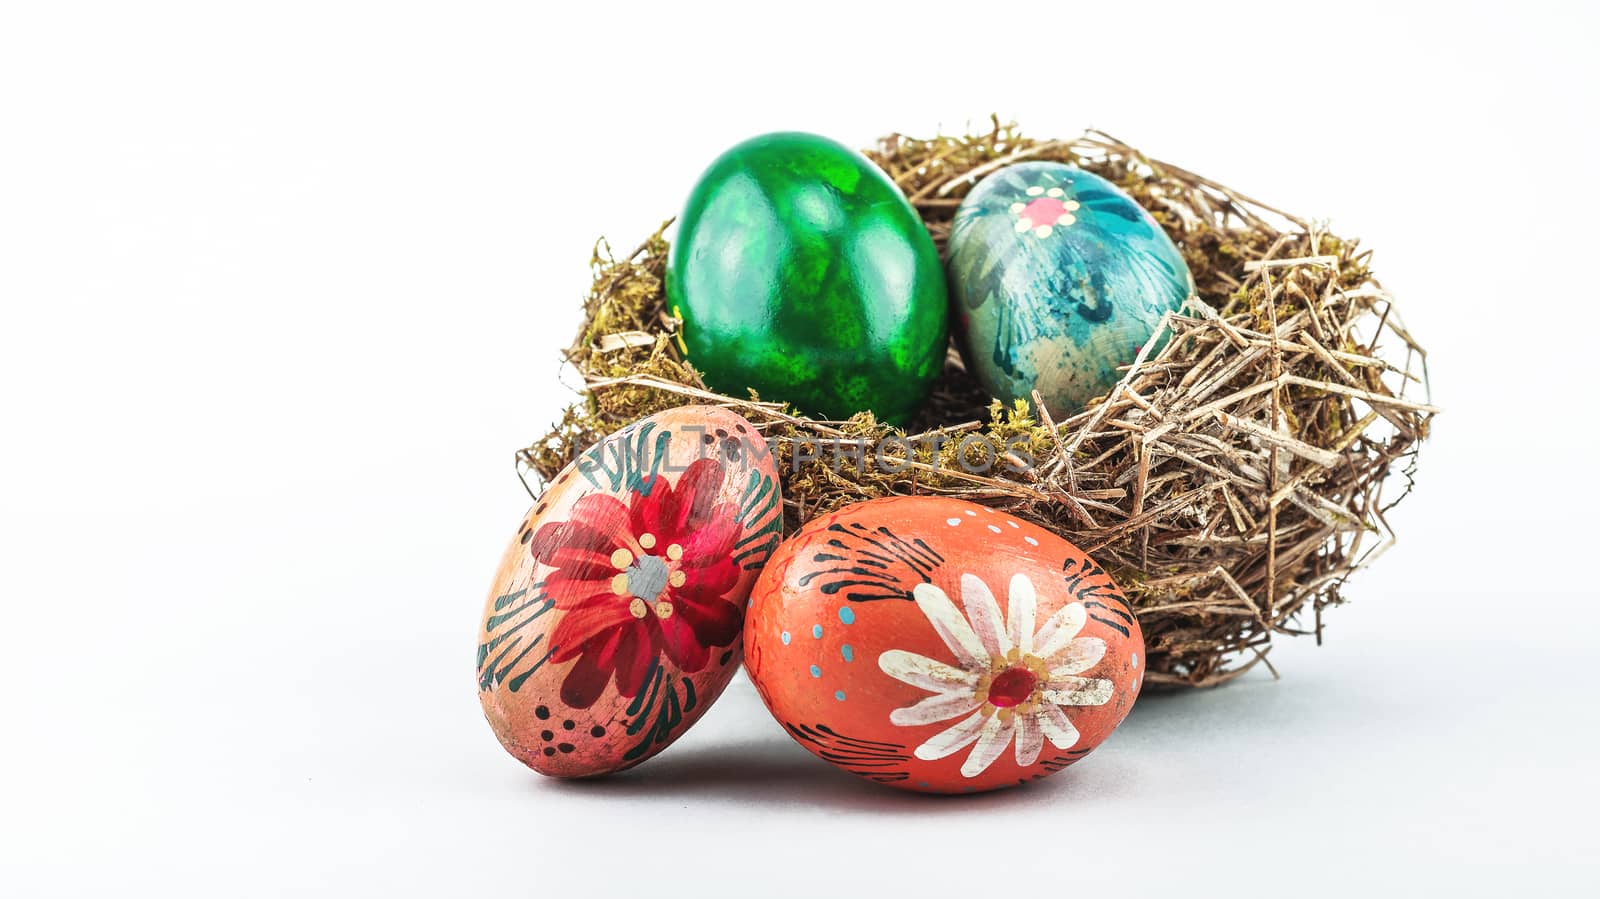 Old Easter eggs in bird nest by 84kamila